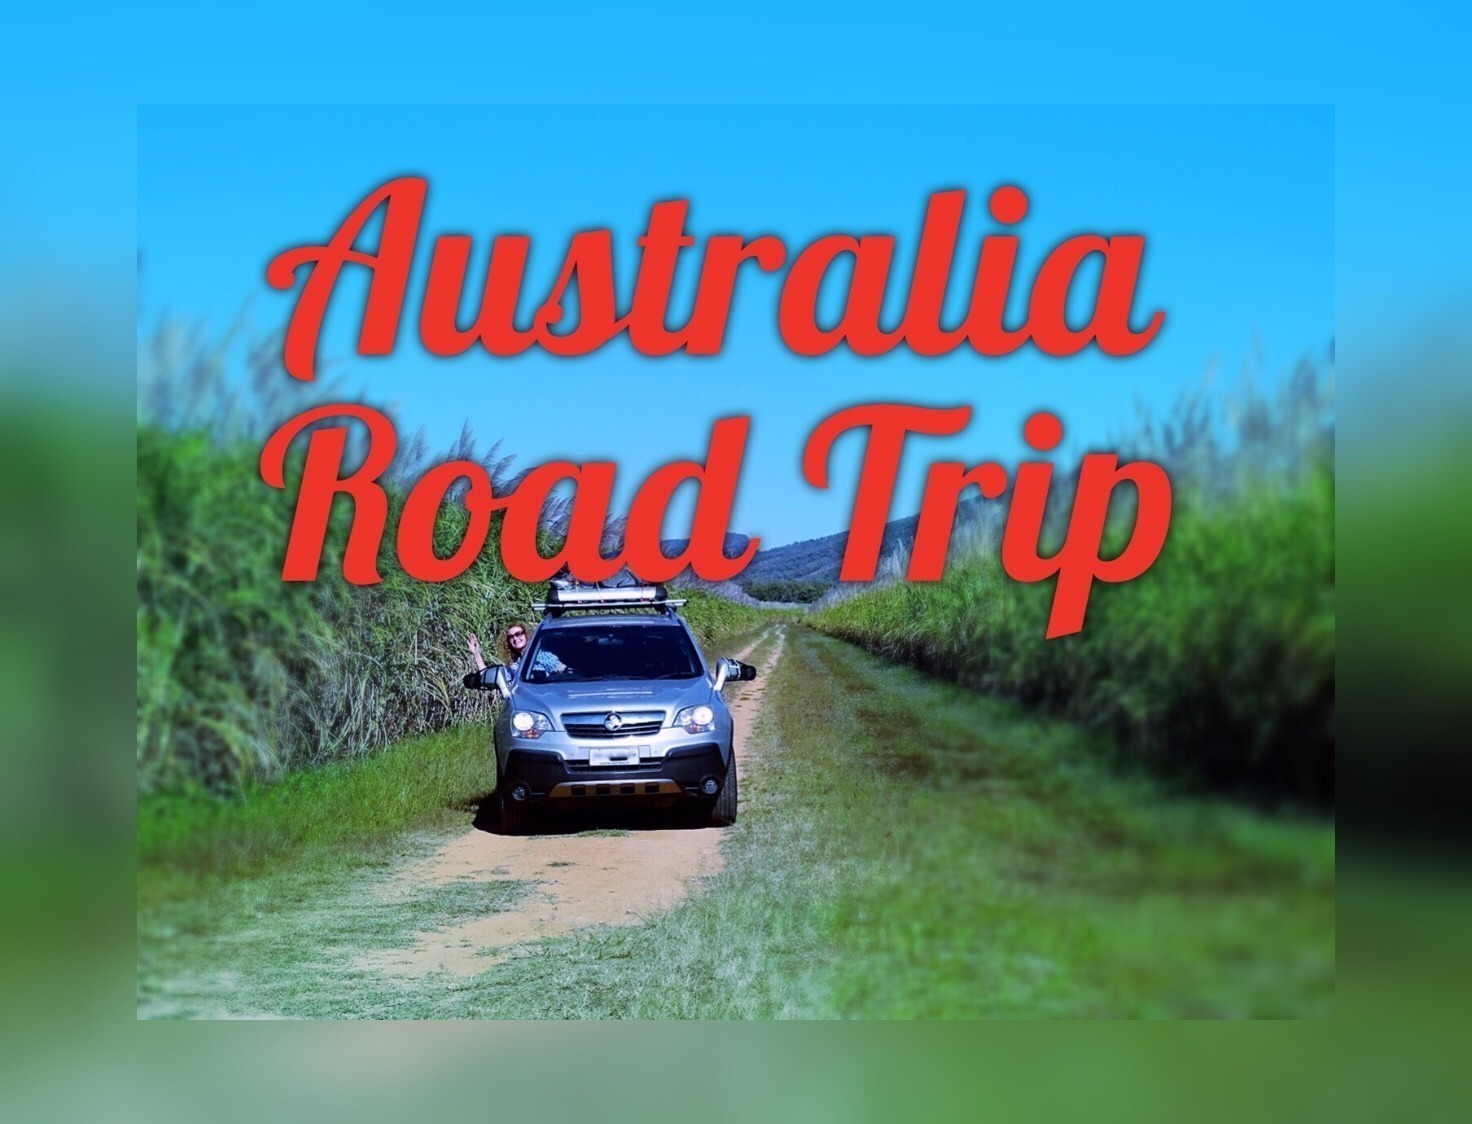 Australia Road Trip